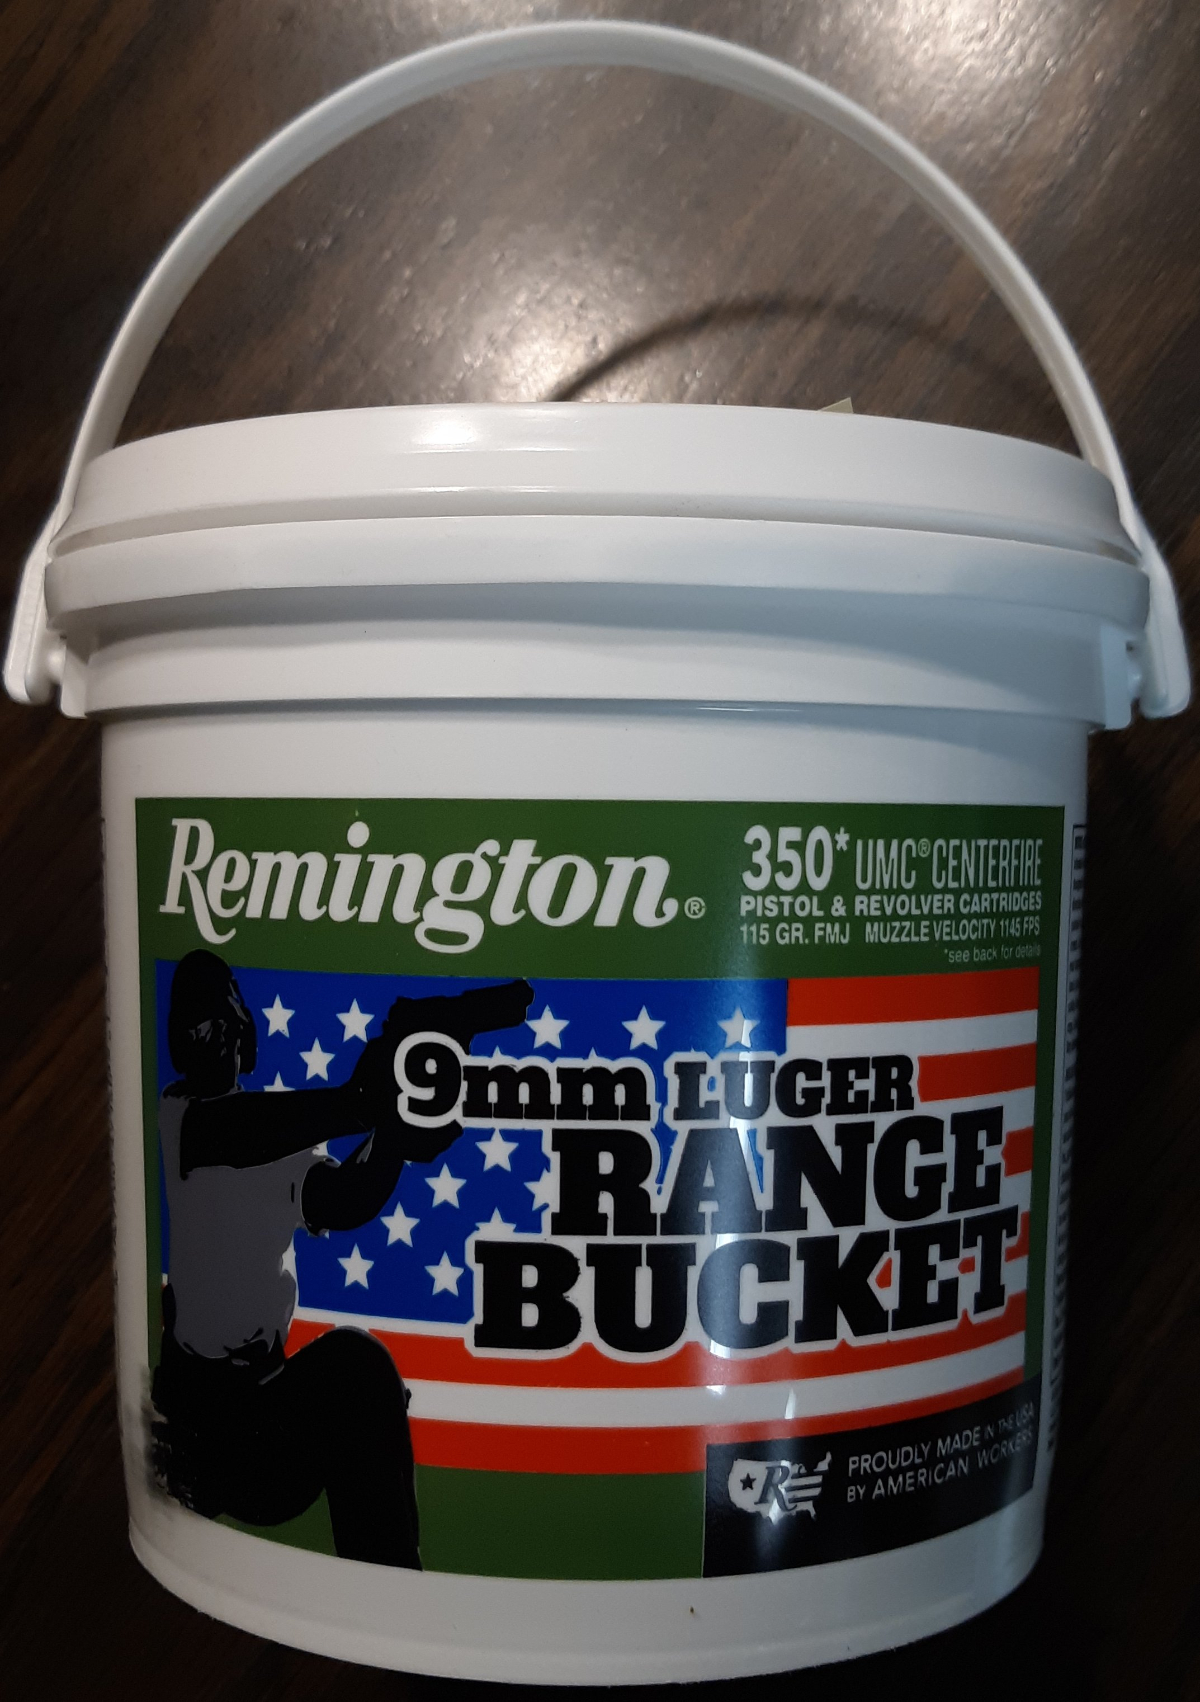 remington-range-bucket-9mm-luger-350-umc-115gr-fmj-l9mm3bc-weaponspro